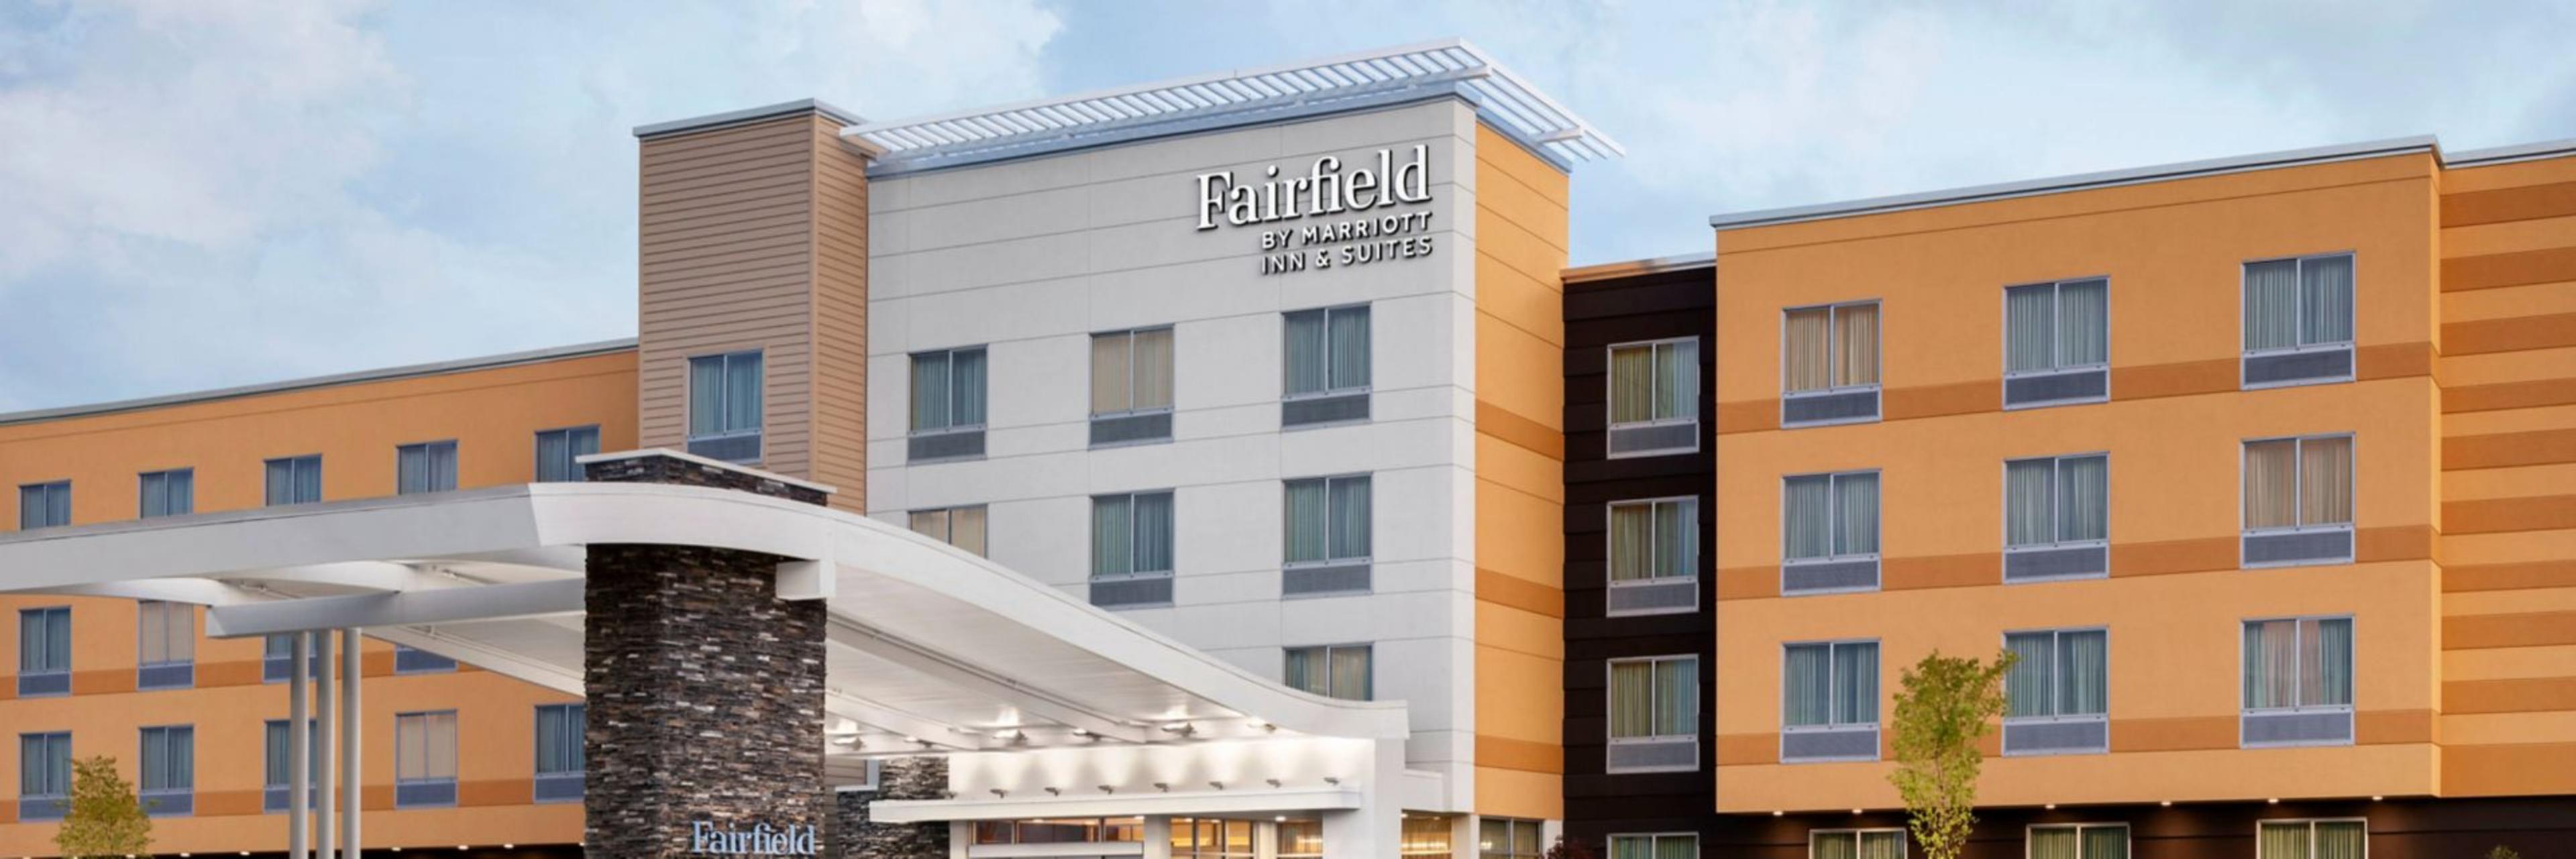 Fairfield Inn & Suites St. Louis Chesterfield